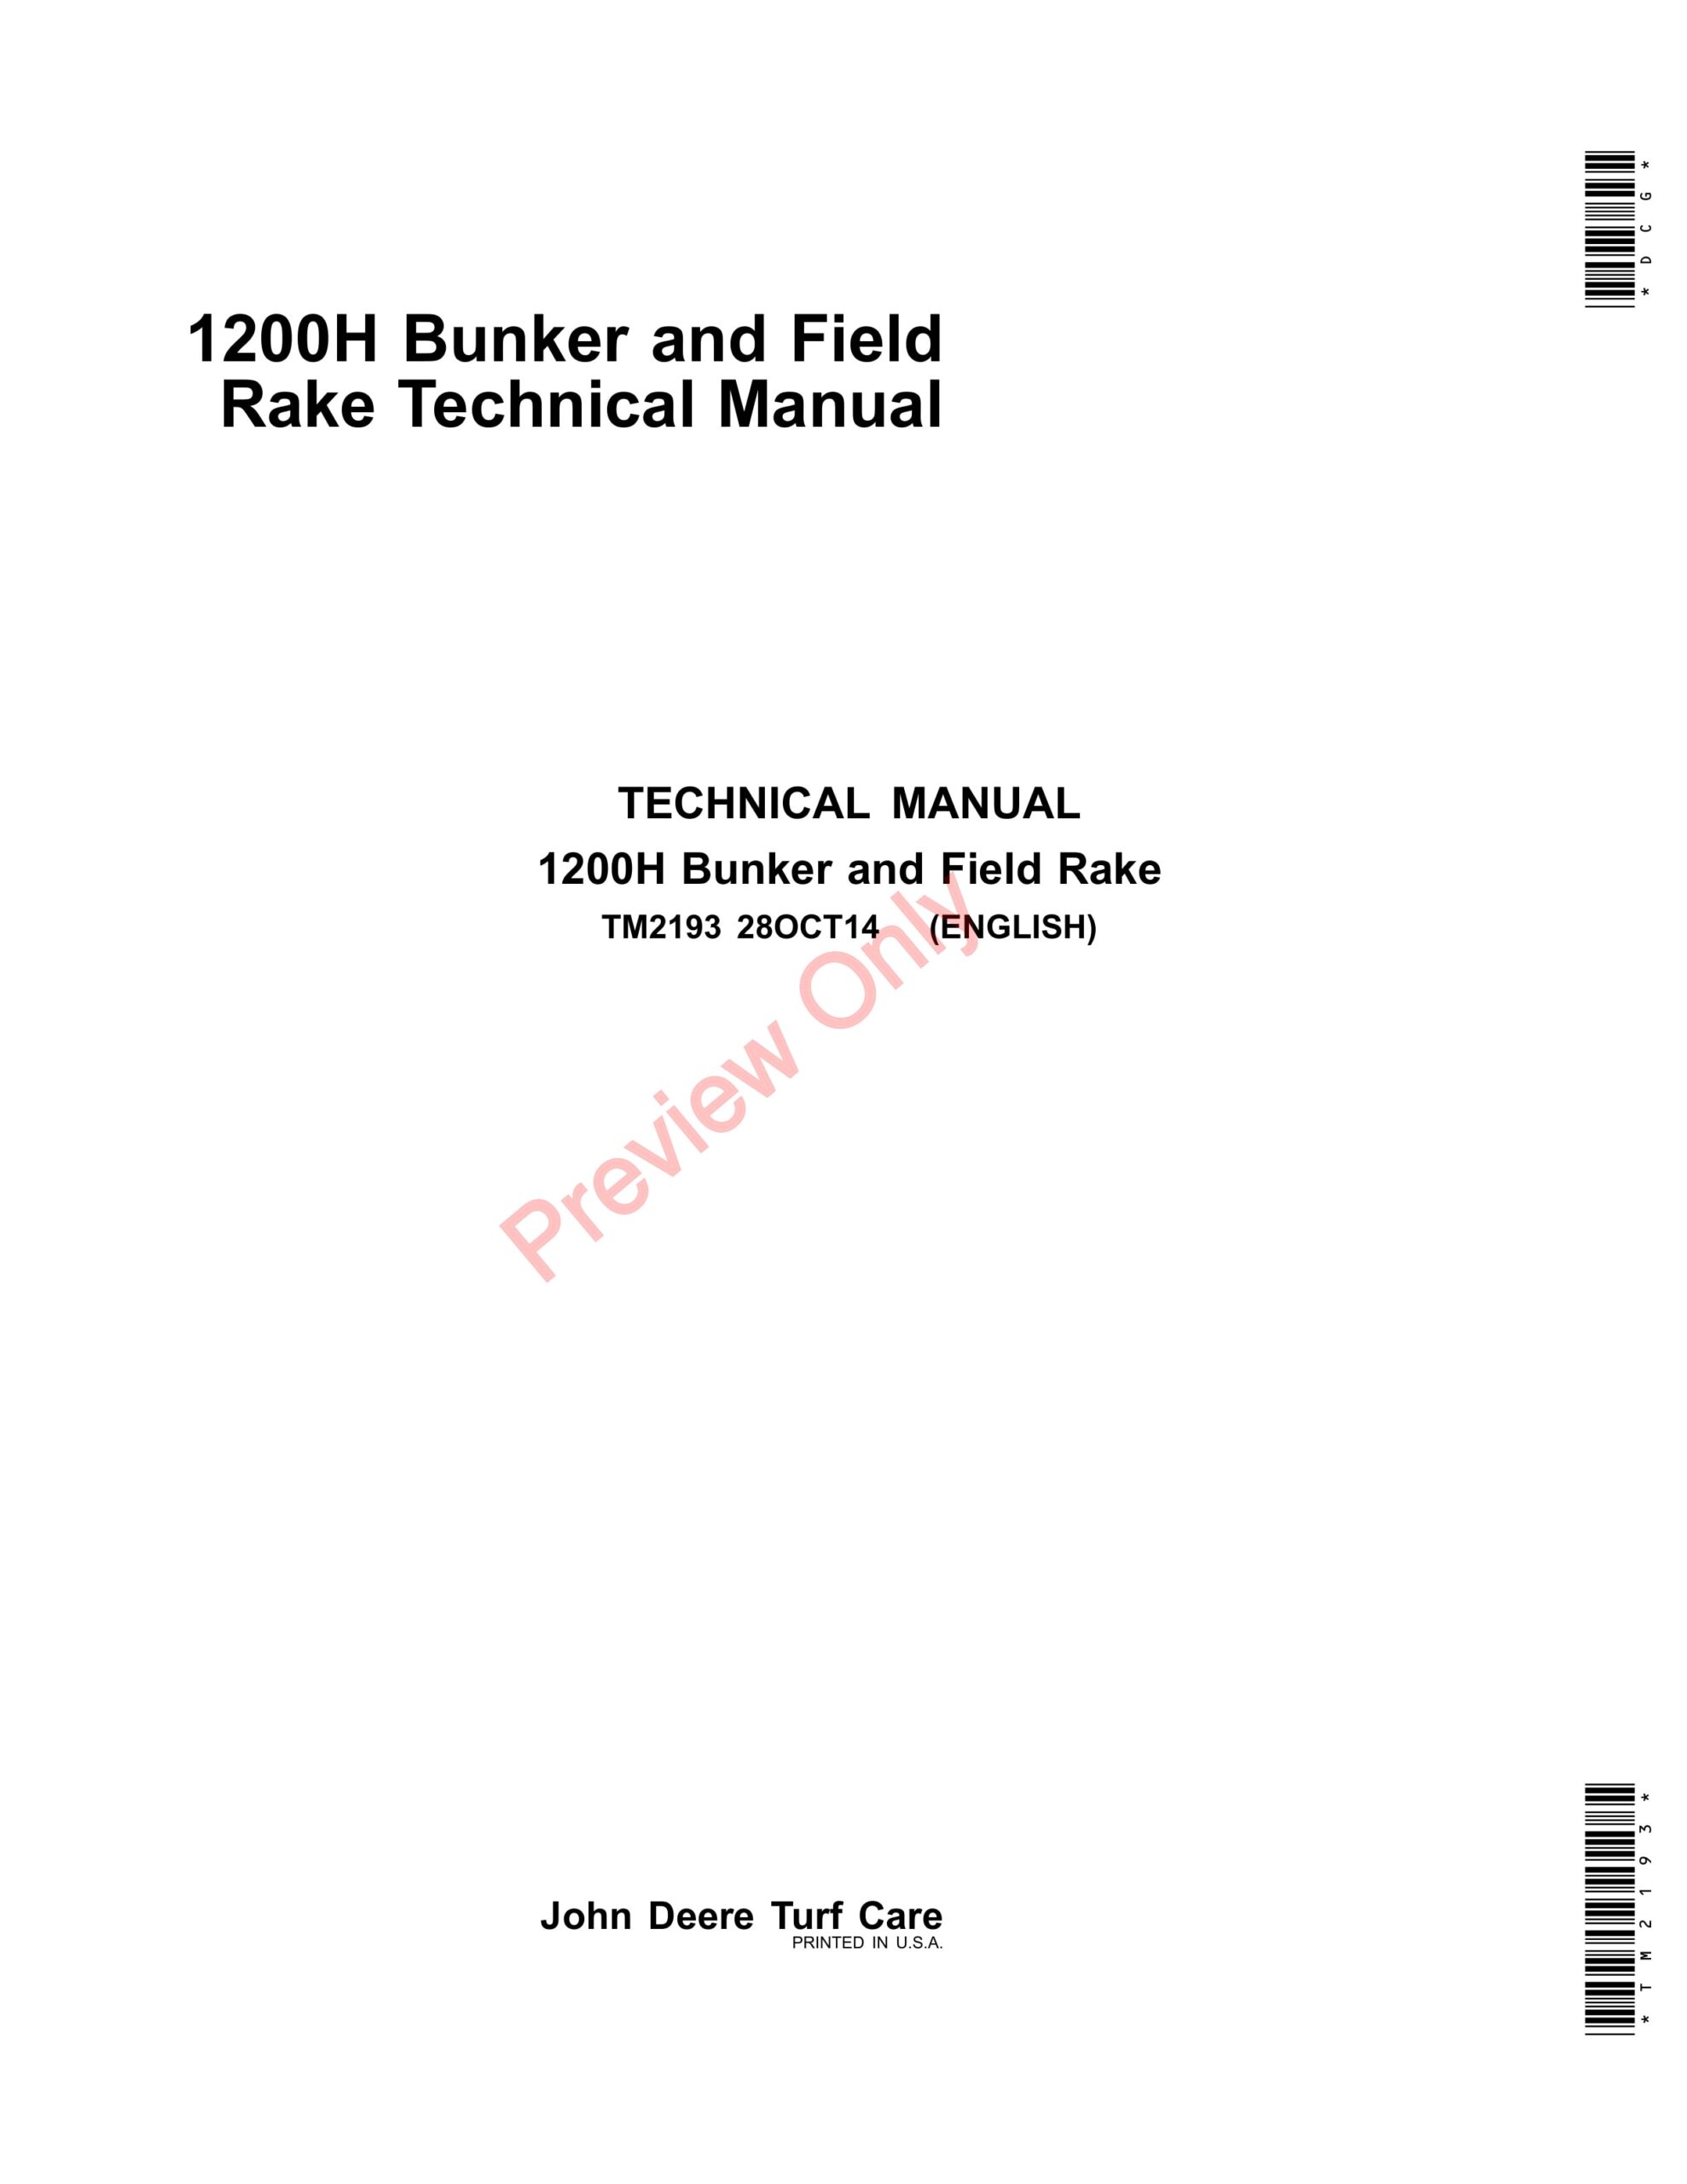 John Deere 1200H Bunker and Field Rake Technical Manual TM2193 28OCT14-1